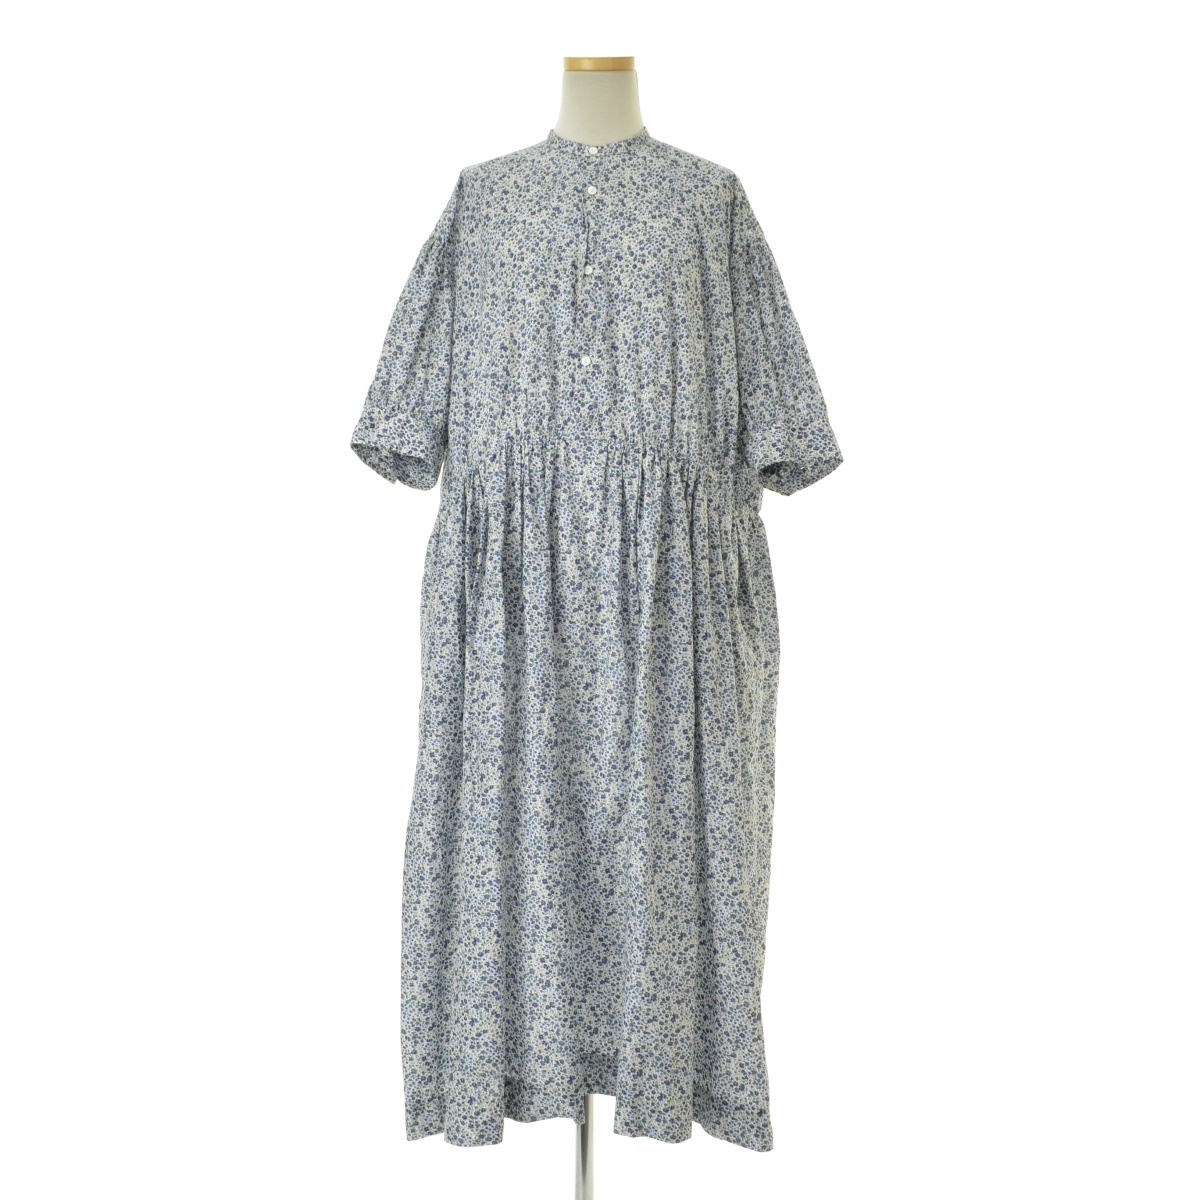 TOUJOURS / トゥジュー Classic Gathered Dress Blue Gray Flower 七分袖ワンピース  -ブランド古着の買取販売カンフル